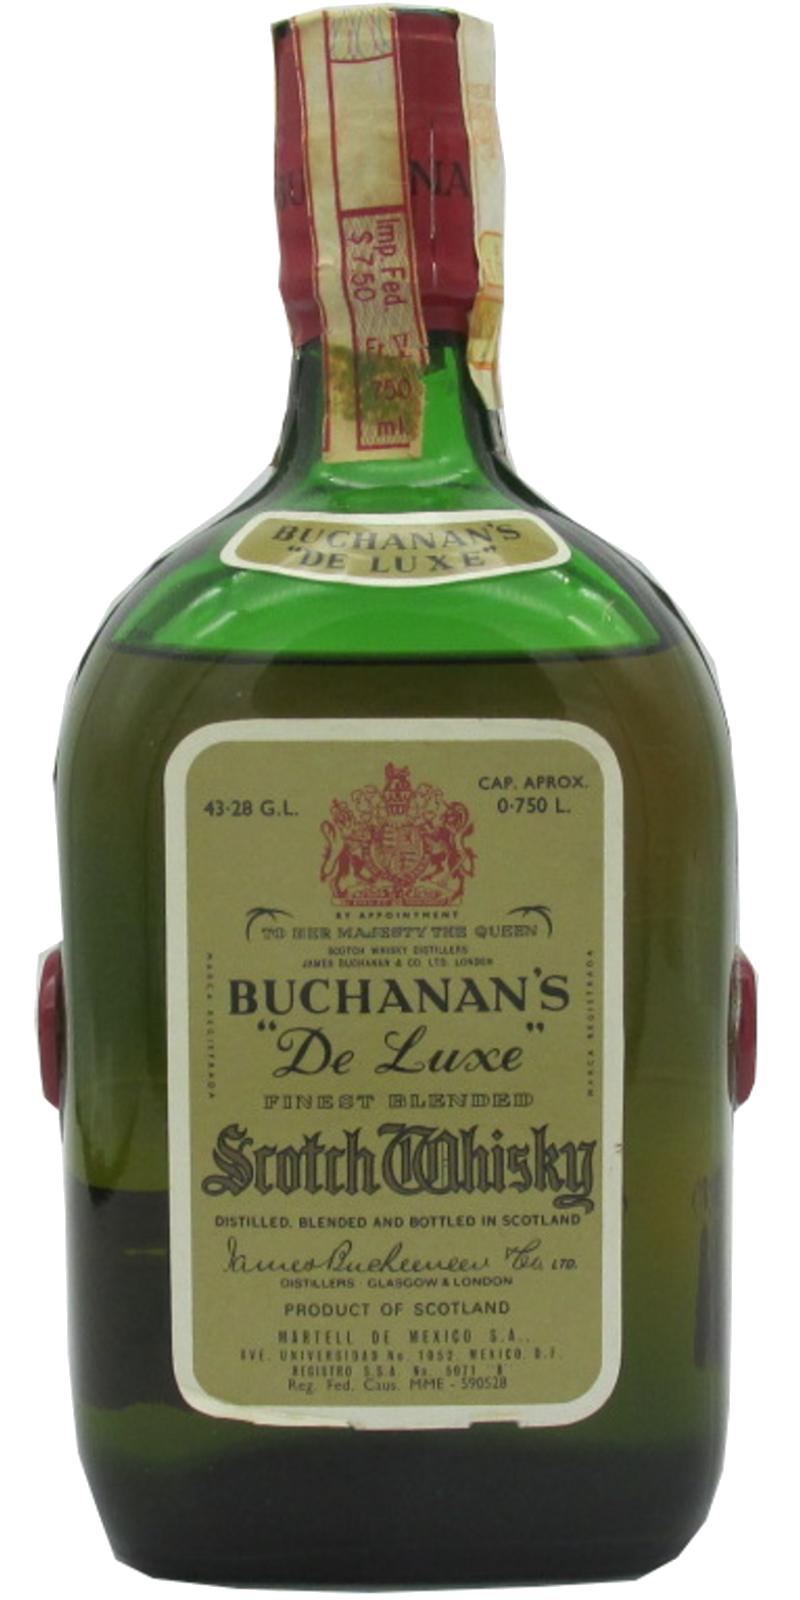 Buchanan's De Luxe Scotch Whisky